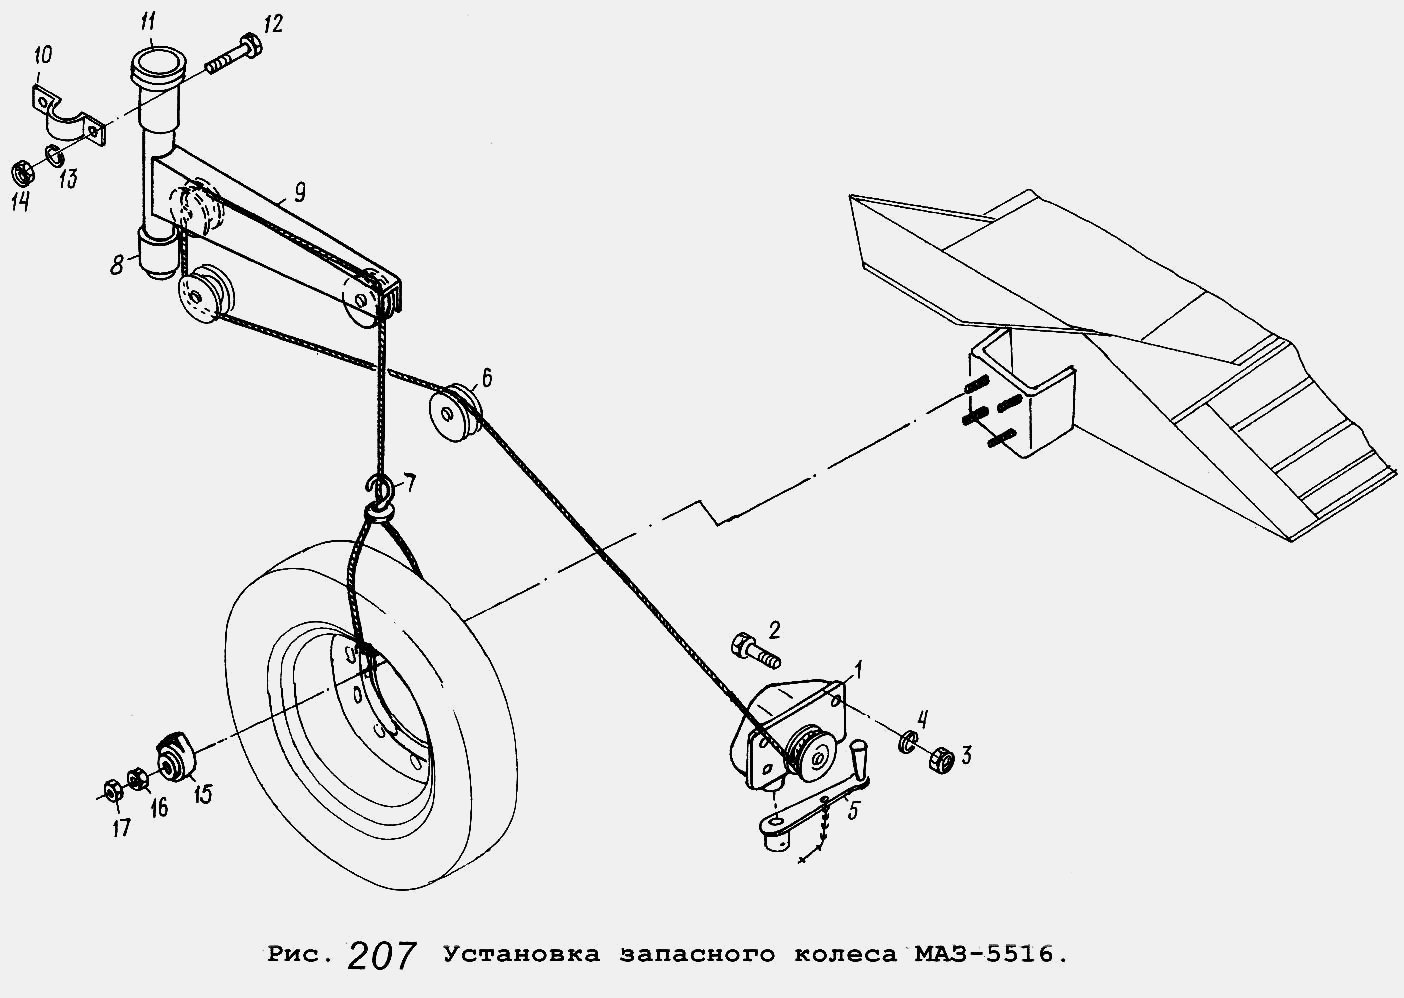 Установка запасного колеса МАЗ-5516 МАЗ  -  общий  каталог